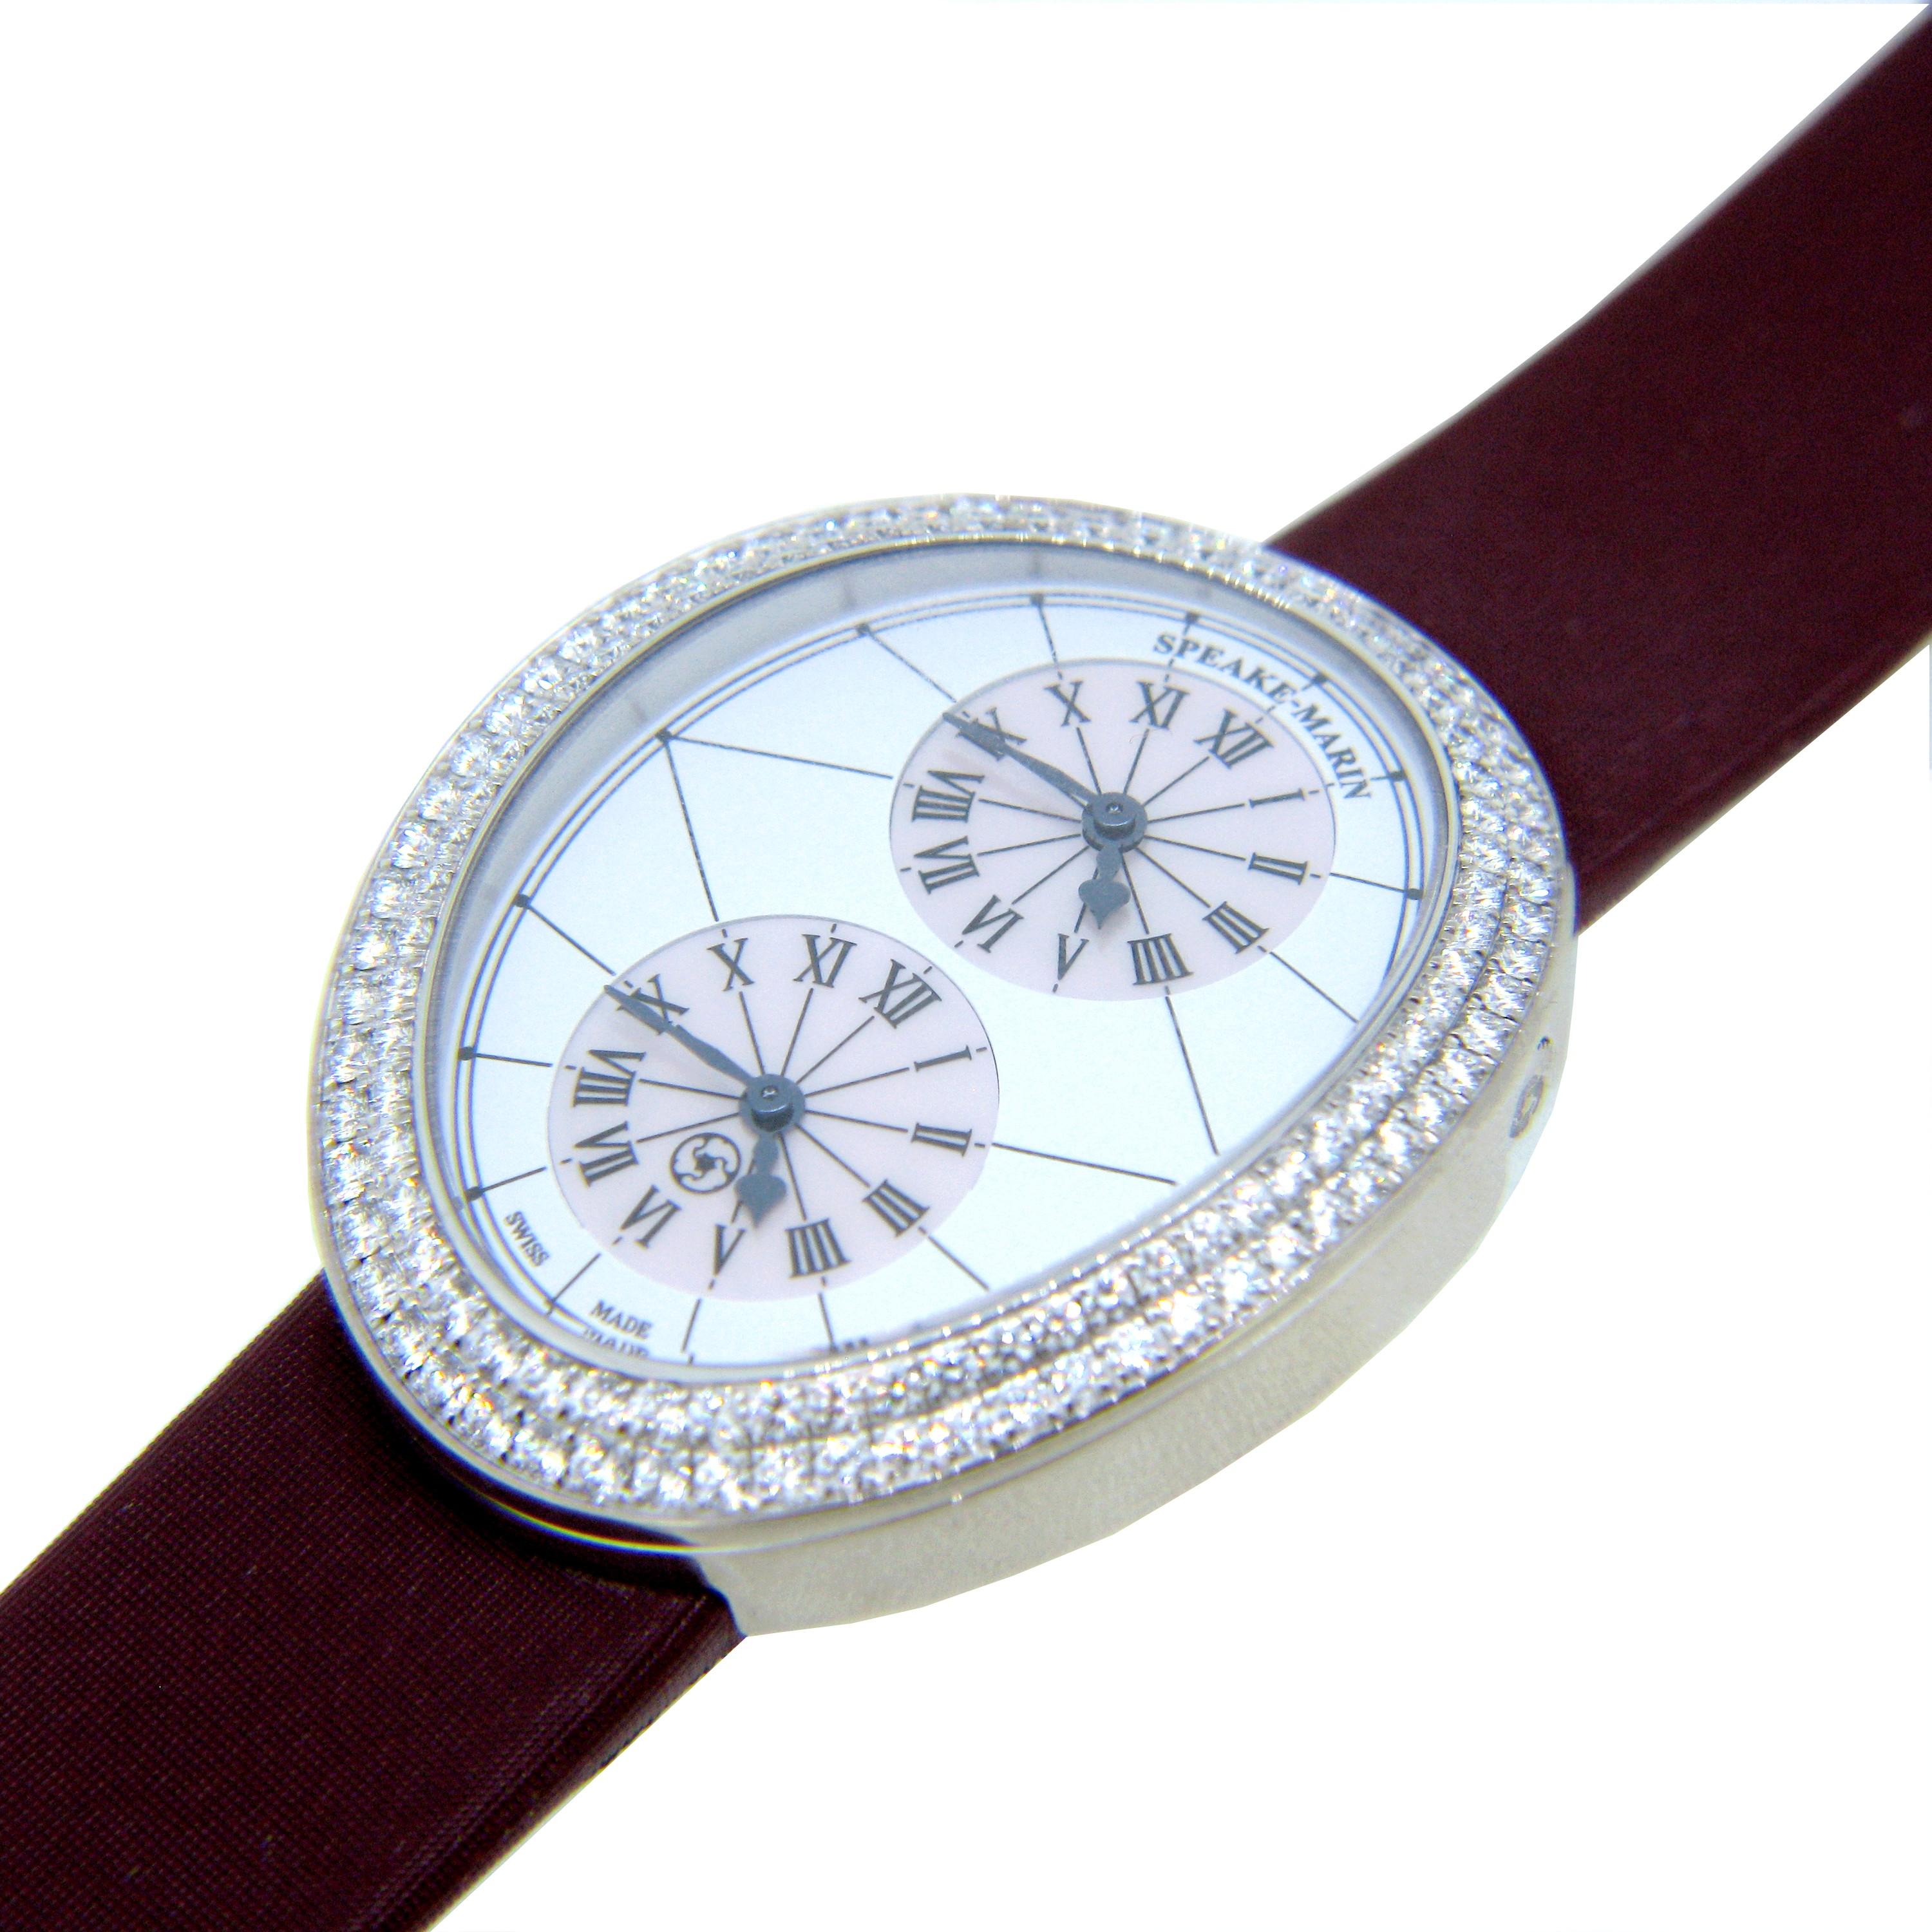 Speake-Marin Shenandoah Dual Timezone White Gold Women's Watch For Sale 2